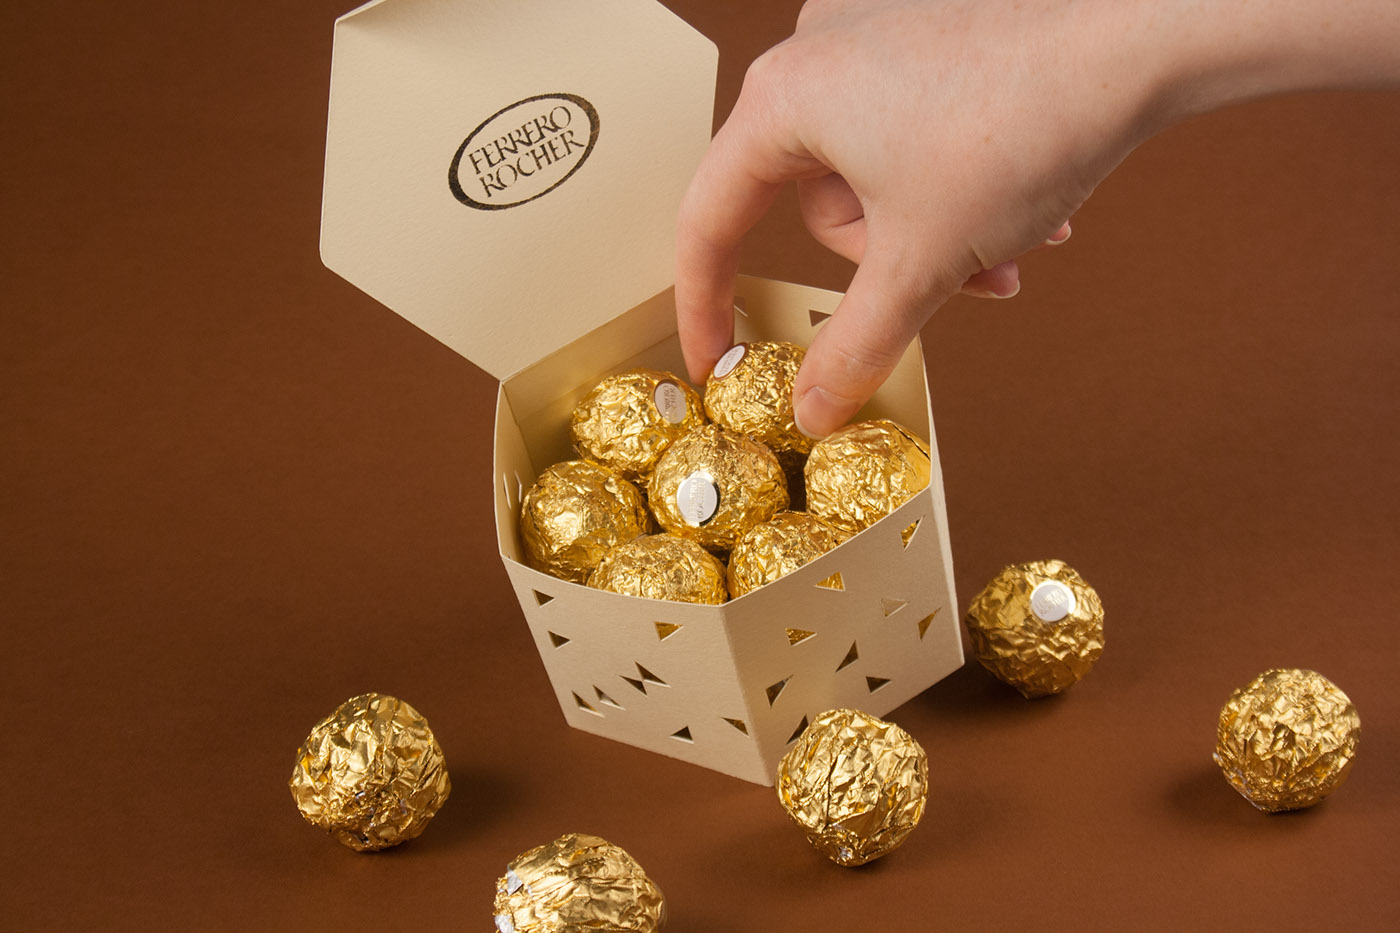 ferrero rocher Sustainability environmentally friendly cream gold foil foiling responsible design chocolate nutella hexagon